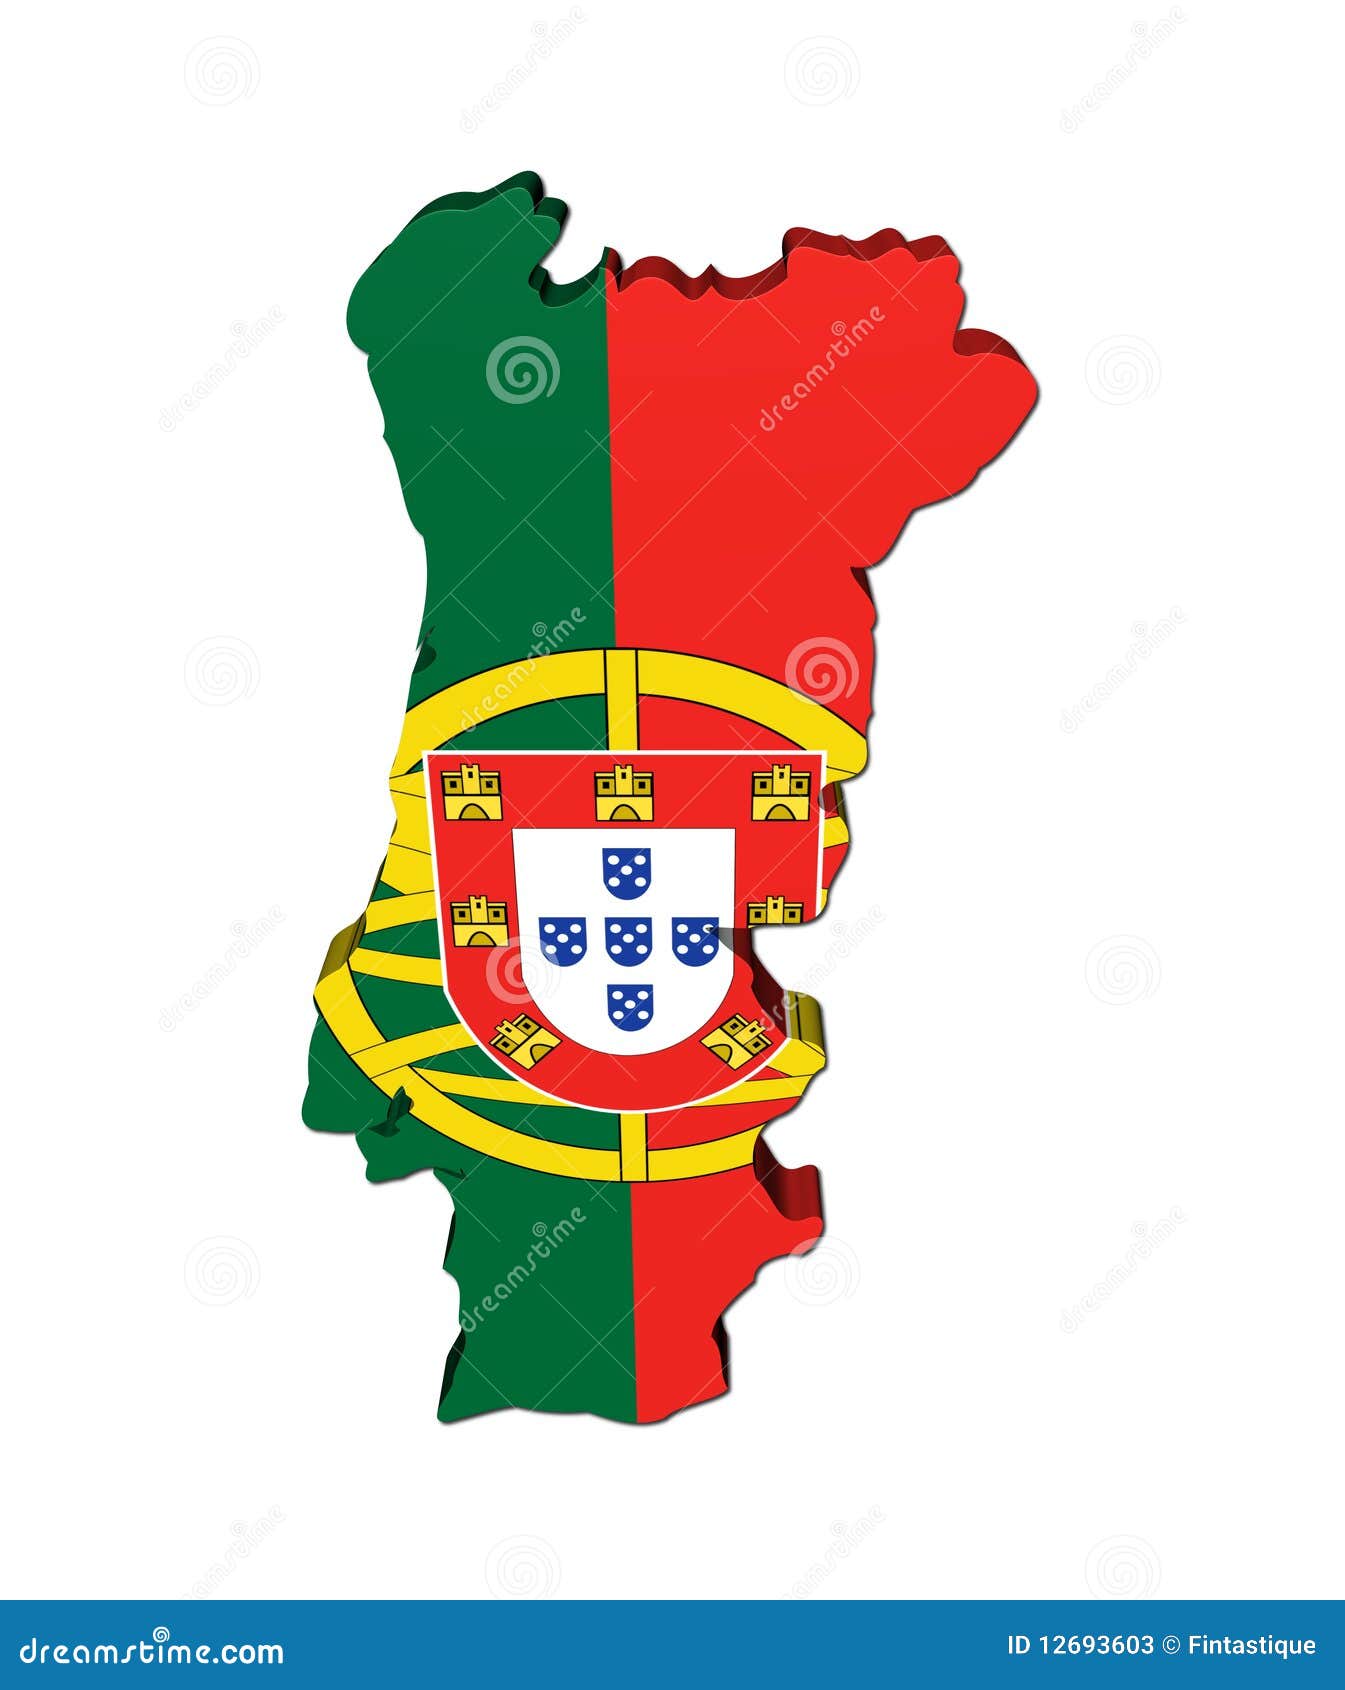 clipart portugal flag - photo #39